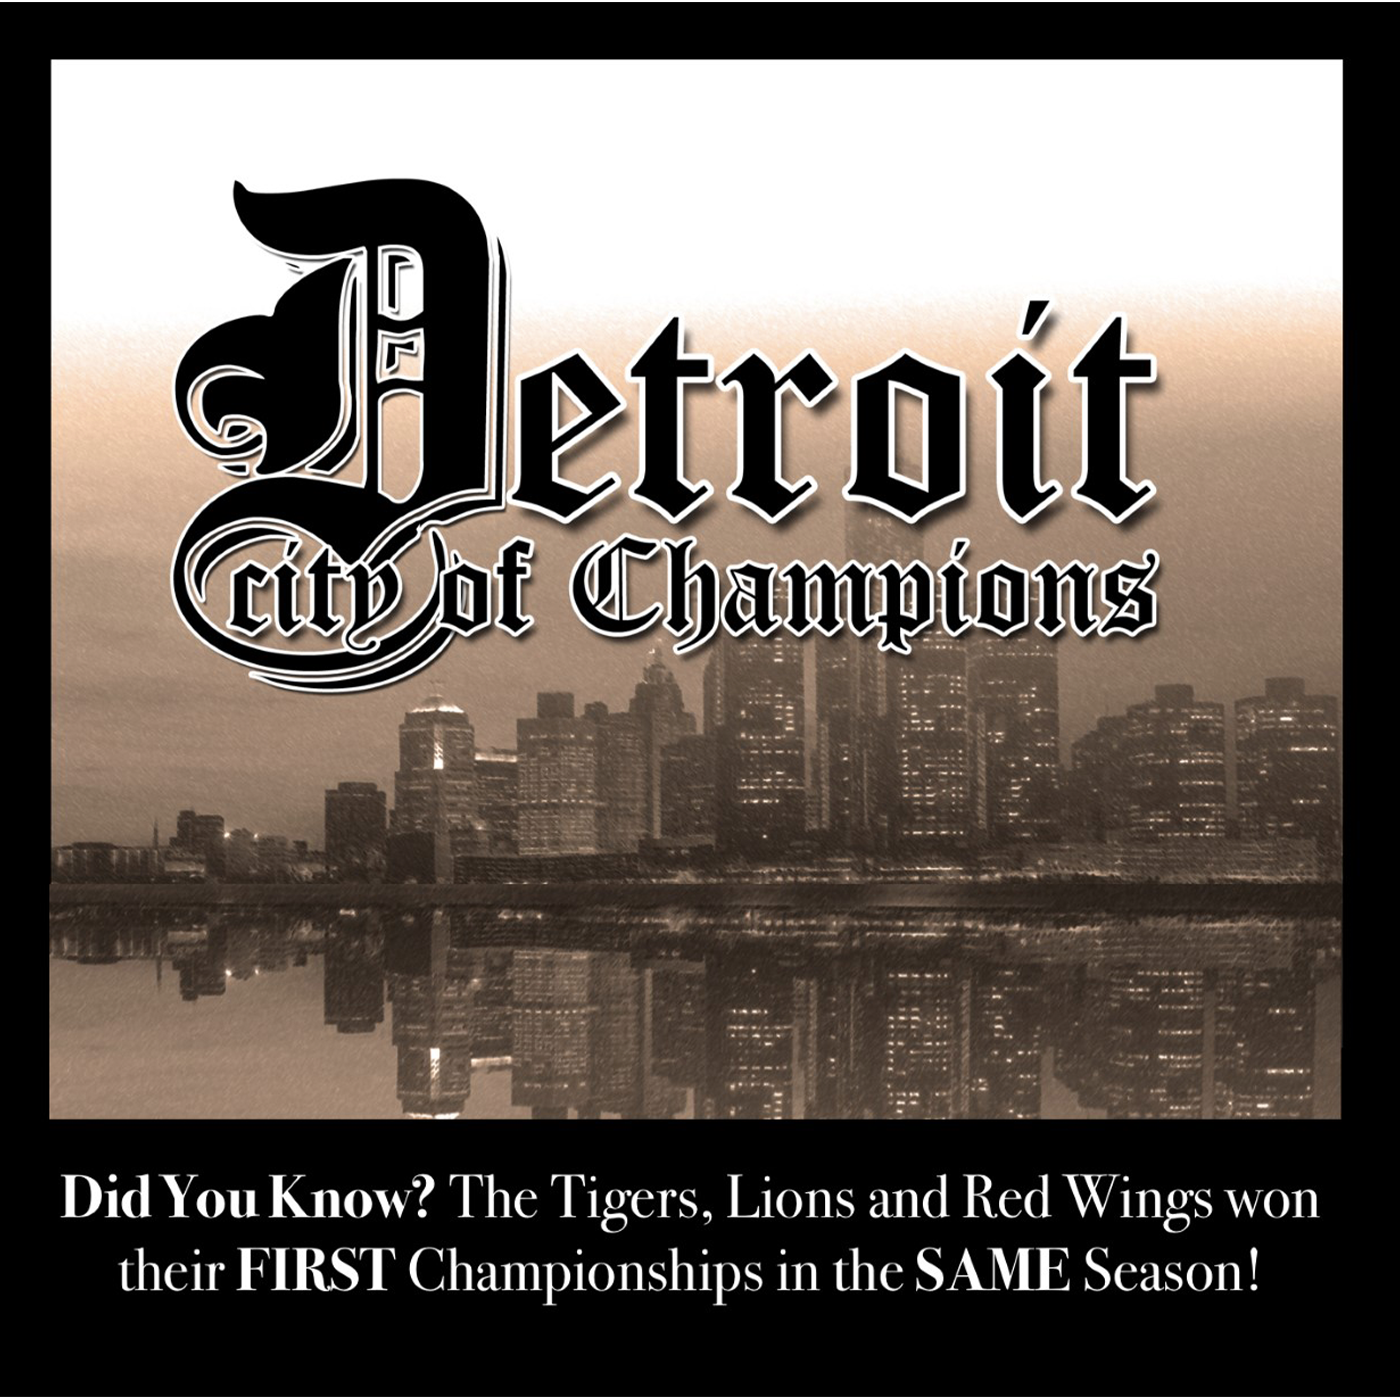 Detroit City of Champions – Joe Louis. Part 1: A History of Boxing – Episode 38